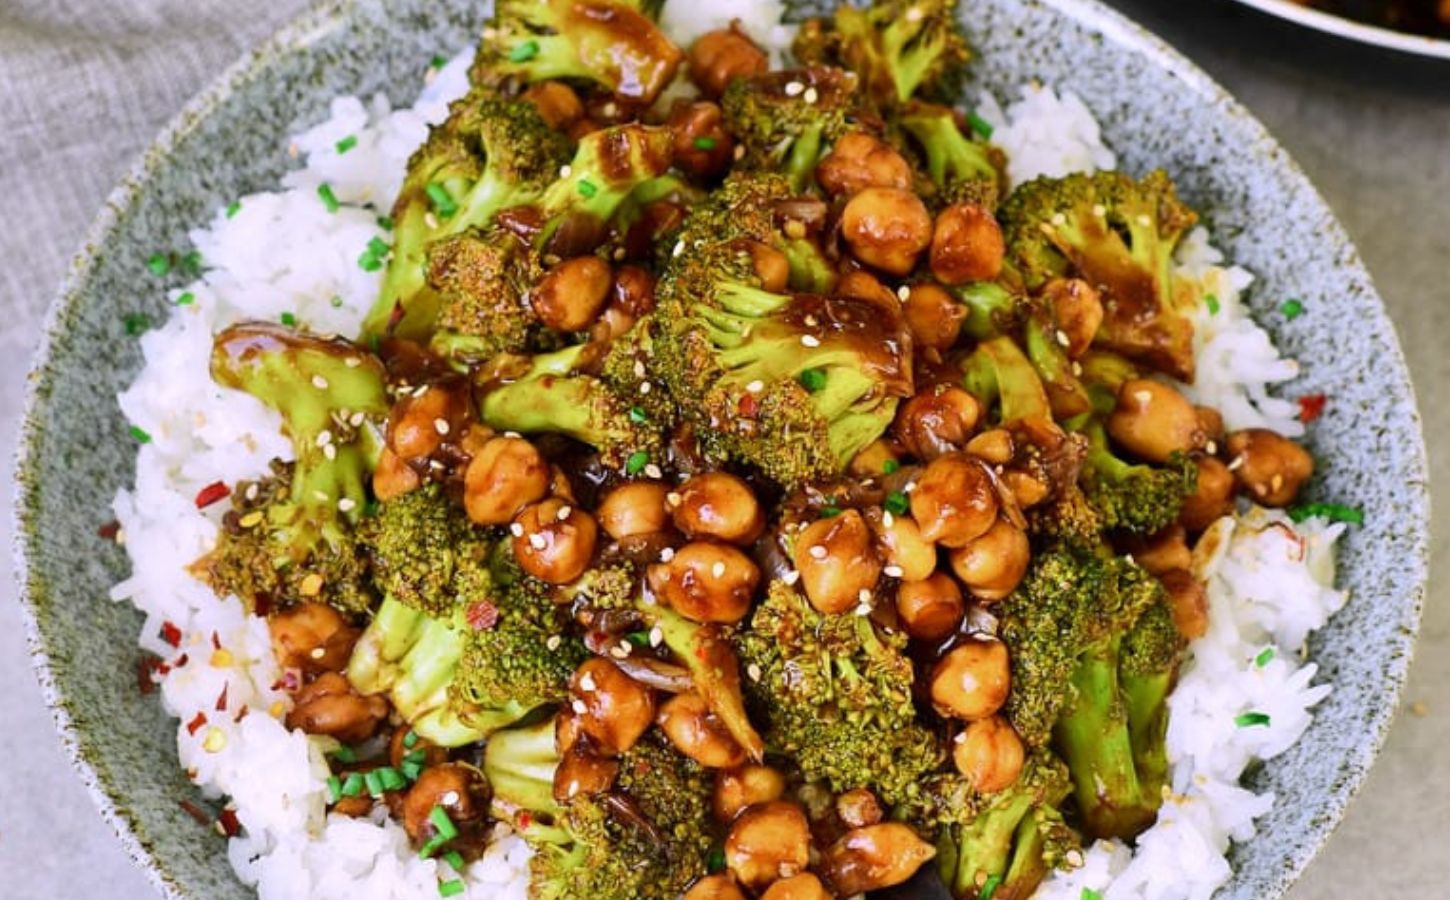 garlic broccoli stir-fry with chickpeas and rice